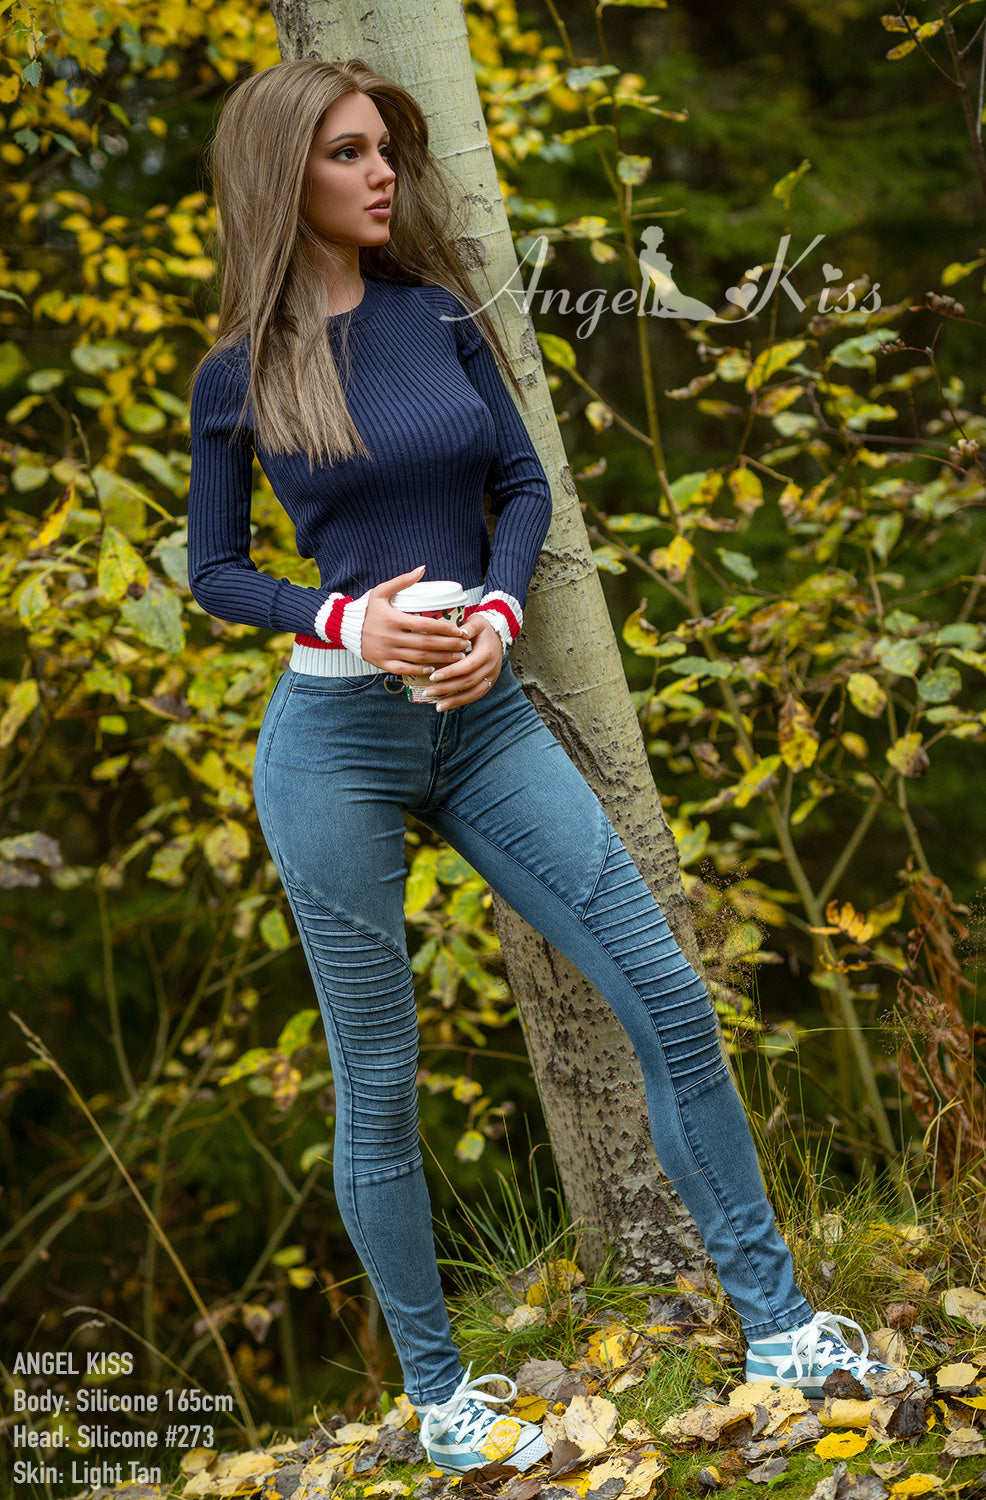 Hannela - AK165cm+S#273 (B) Beauty exposes wonderful ketone body during a forest trip